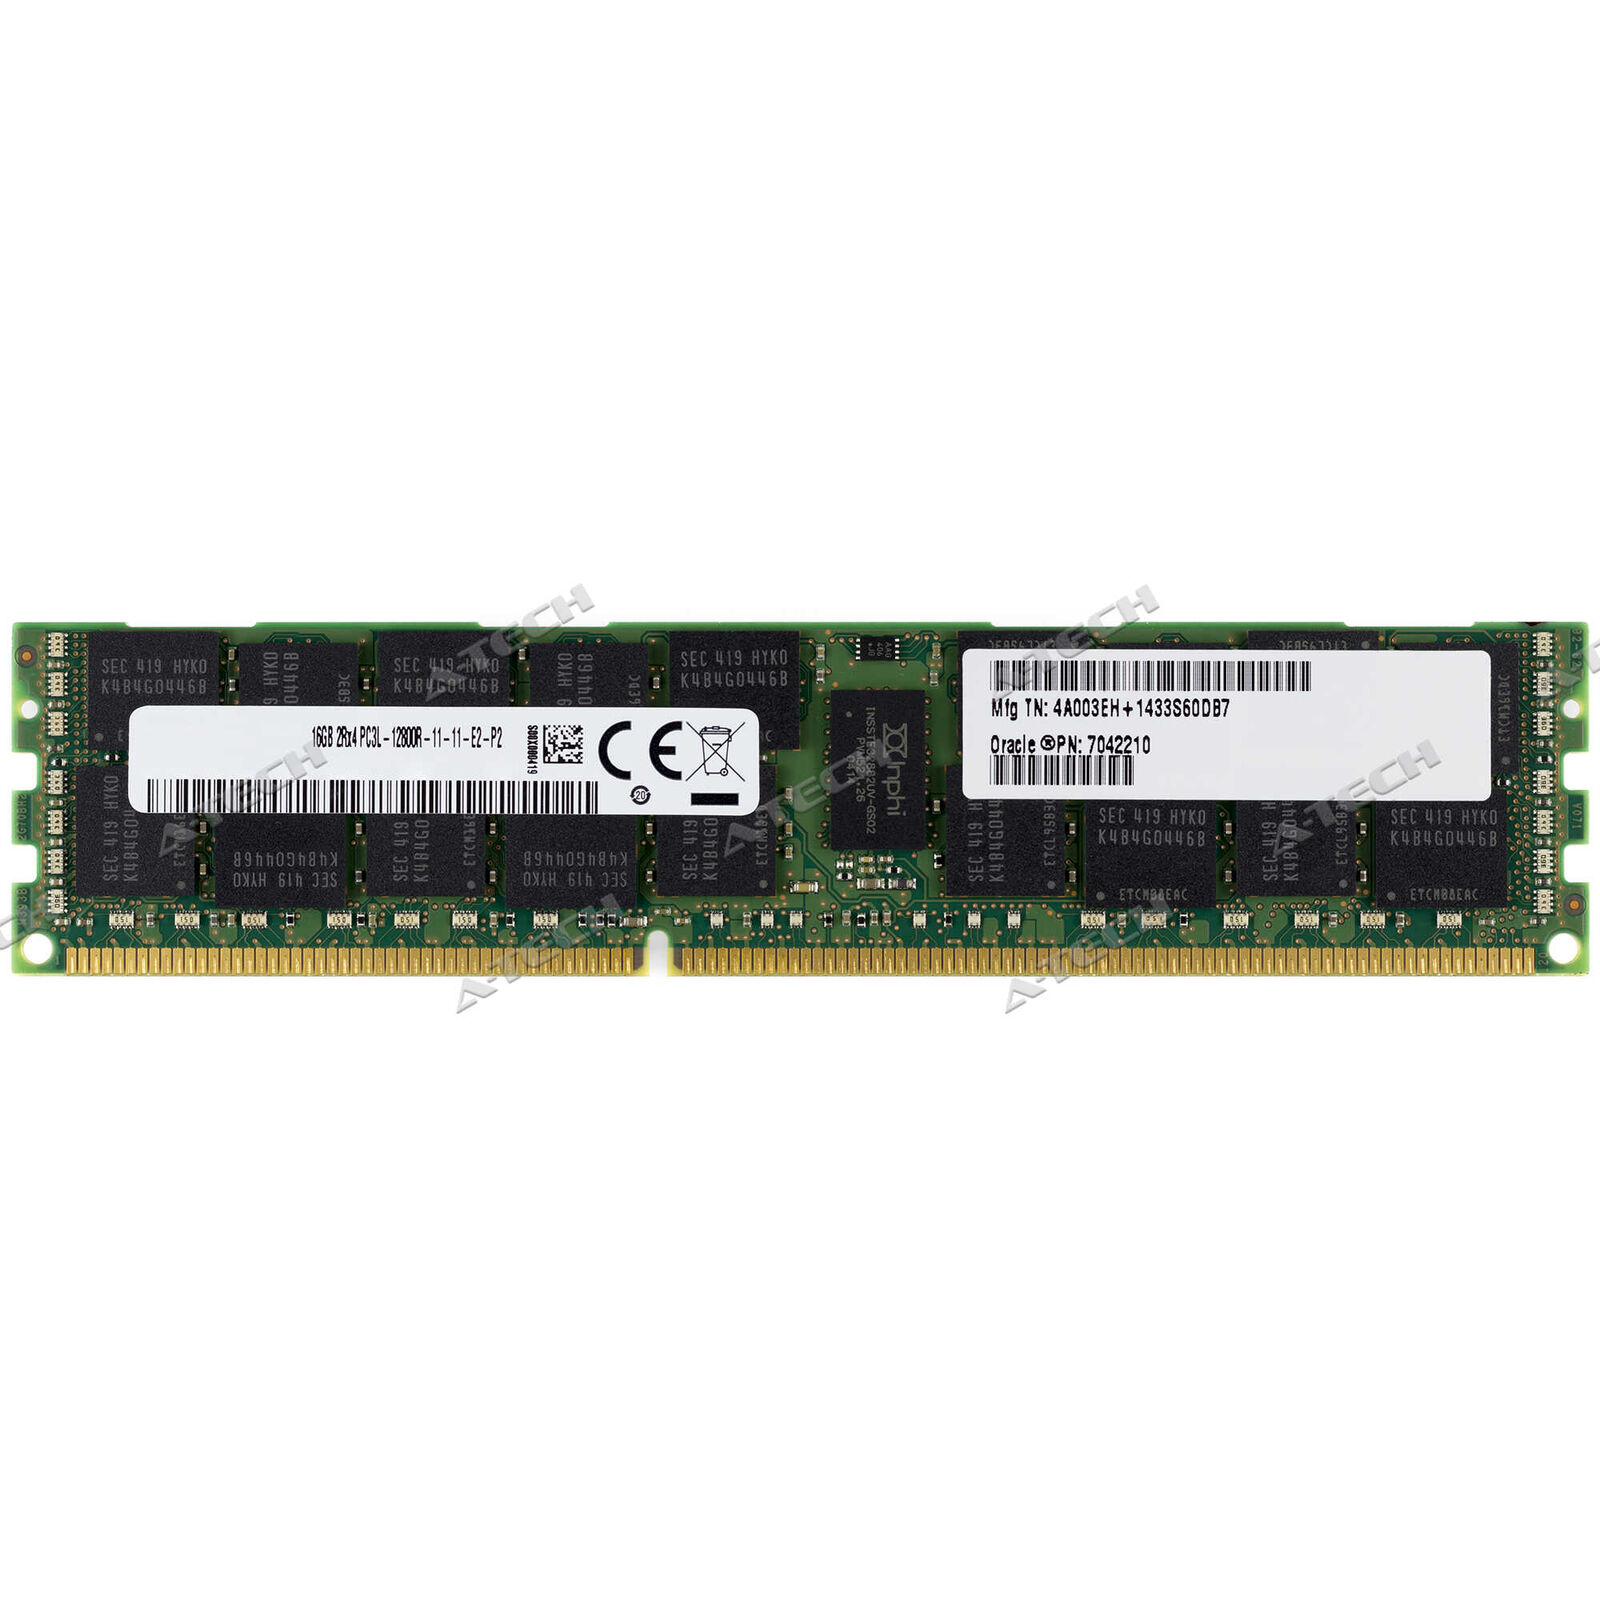 Oracle-Sun 7042210 16GB PC3L-12800 ECC REGISTERED RDIMM 2Rx4 Server Memory RAM